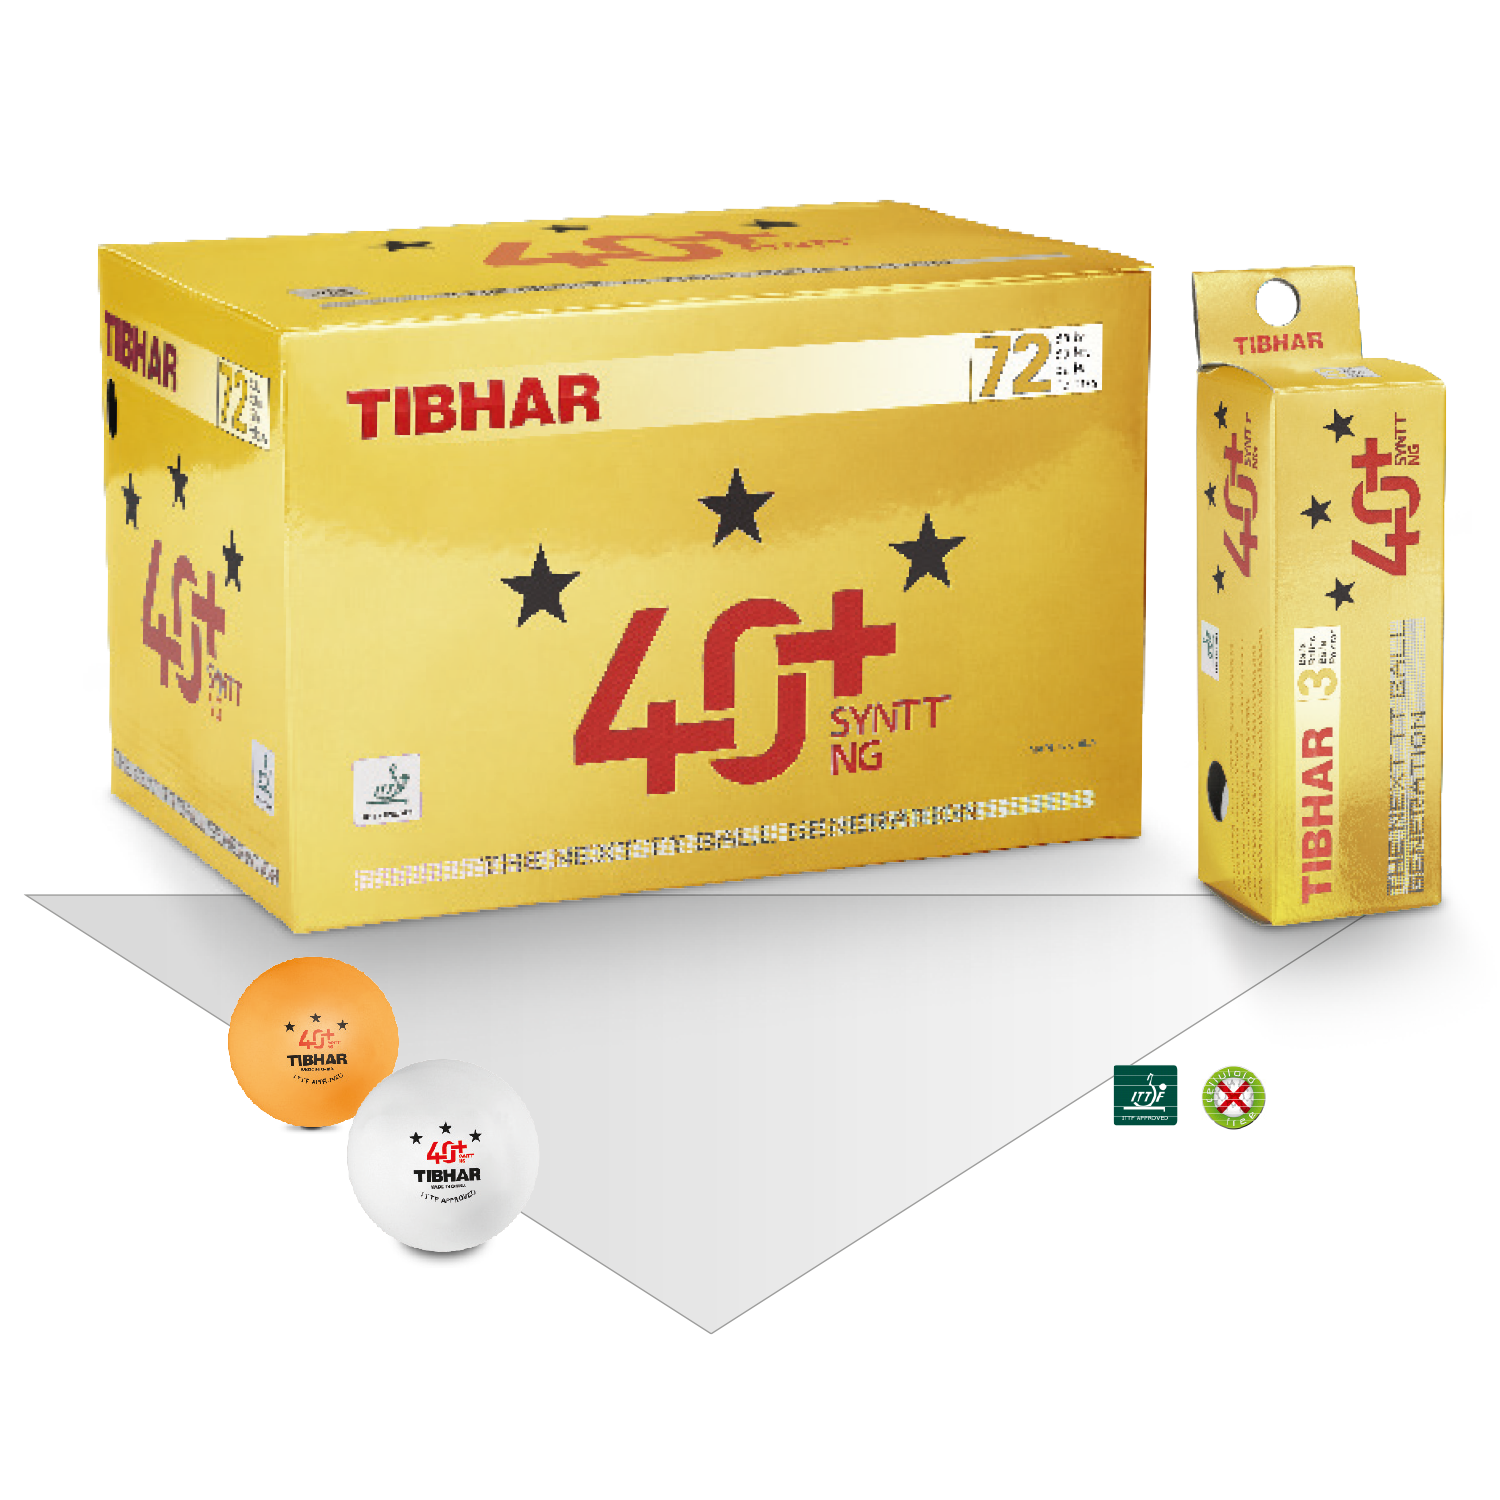 Tibhar 3 Stars 40 SYNTT Table Tennis Ball Sale